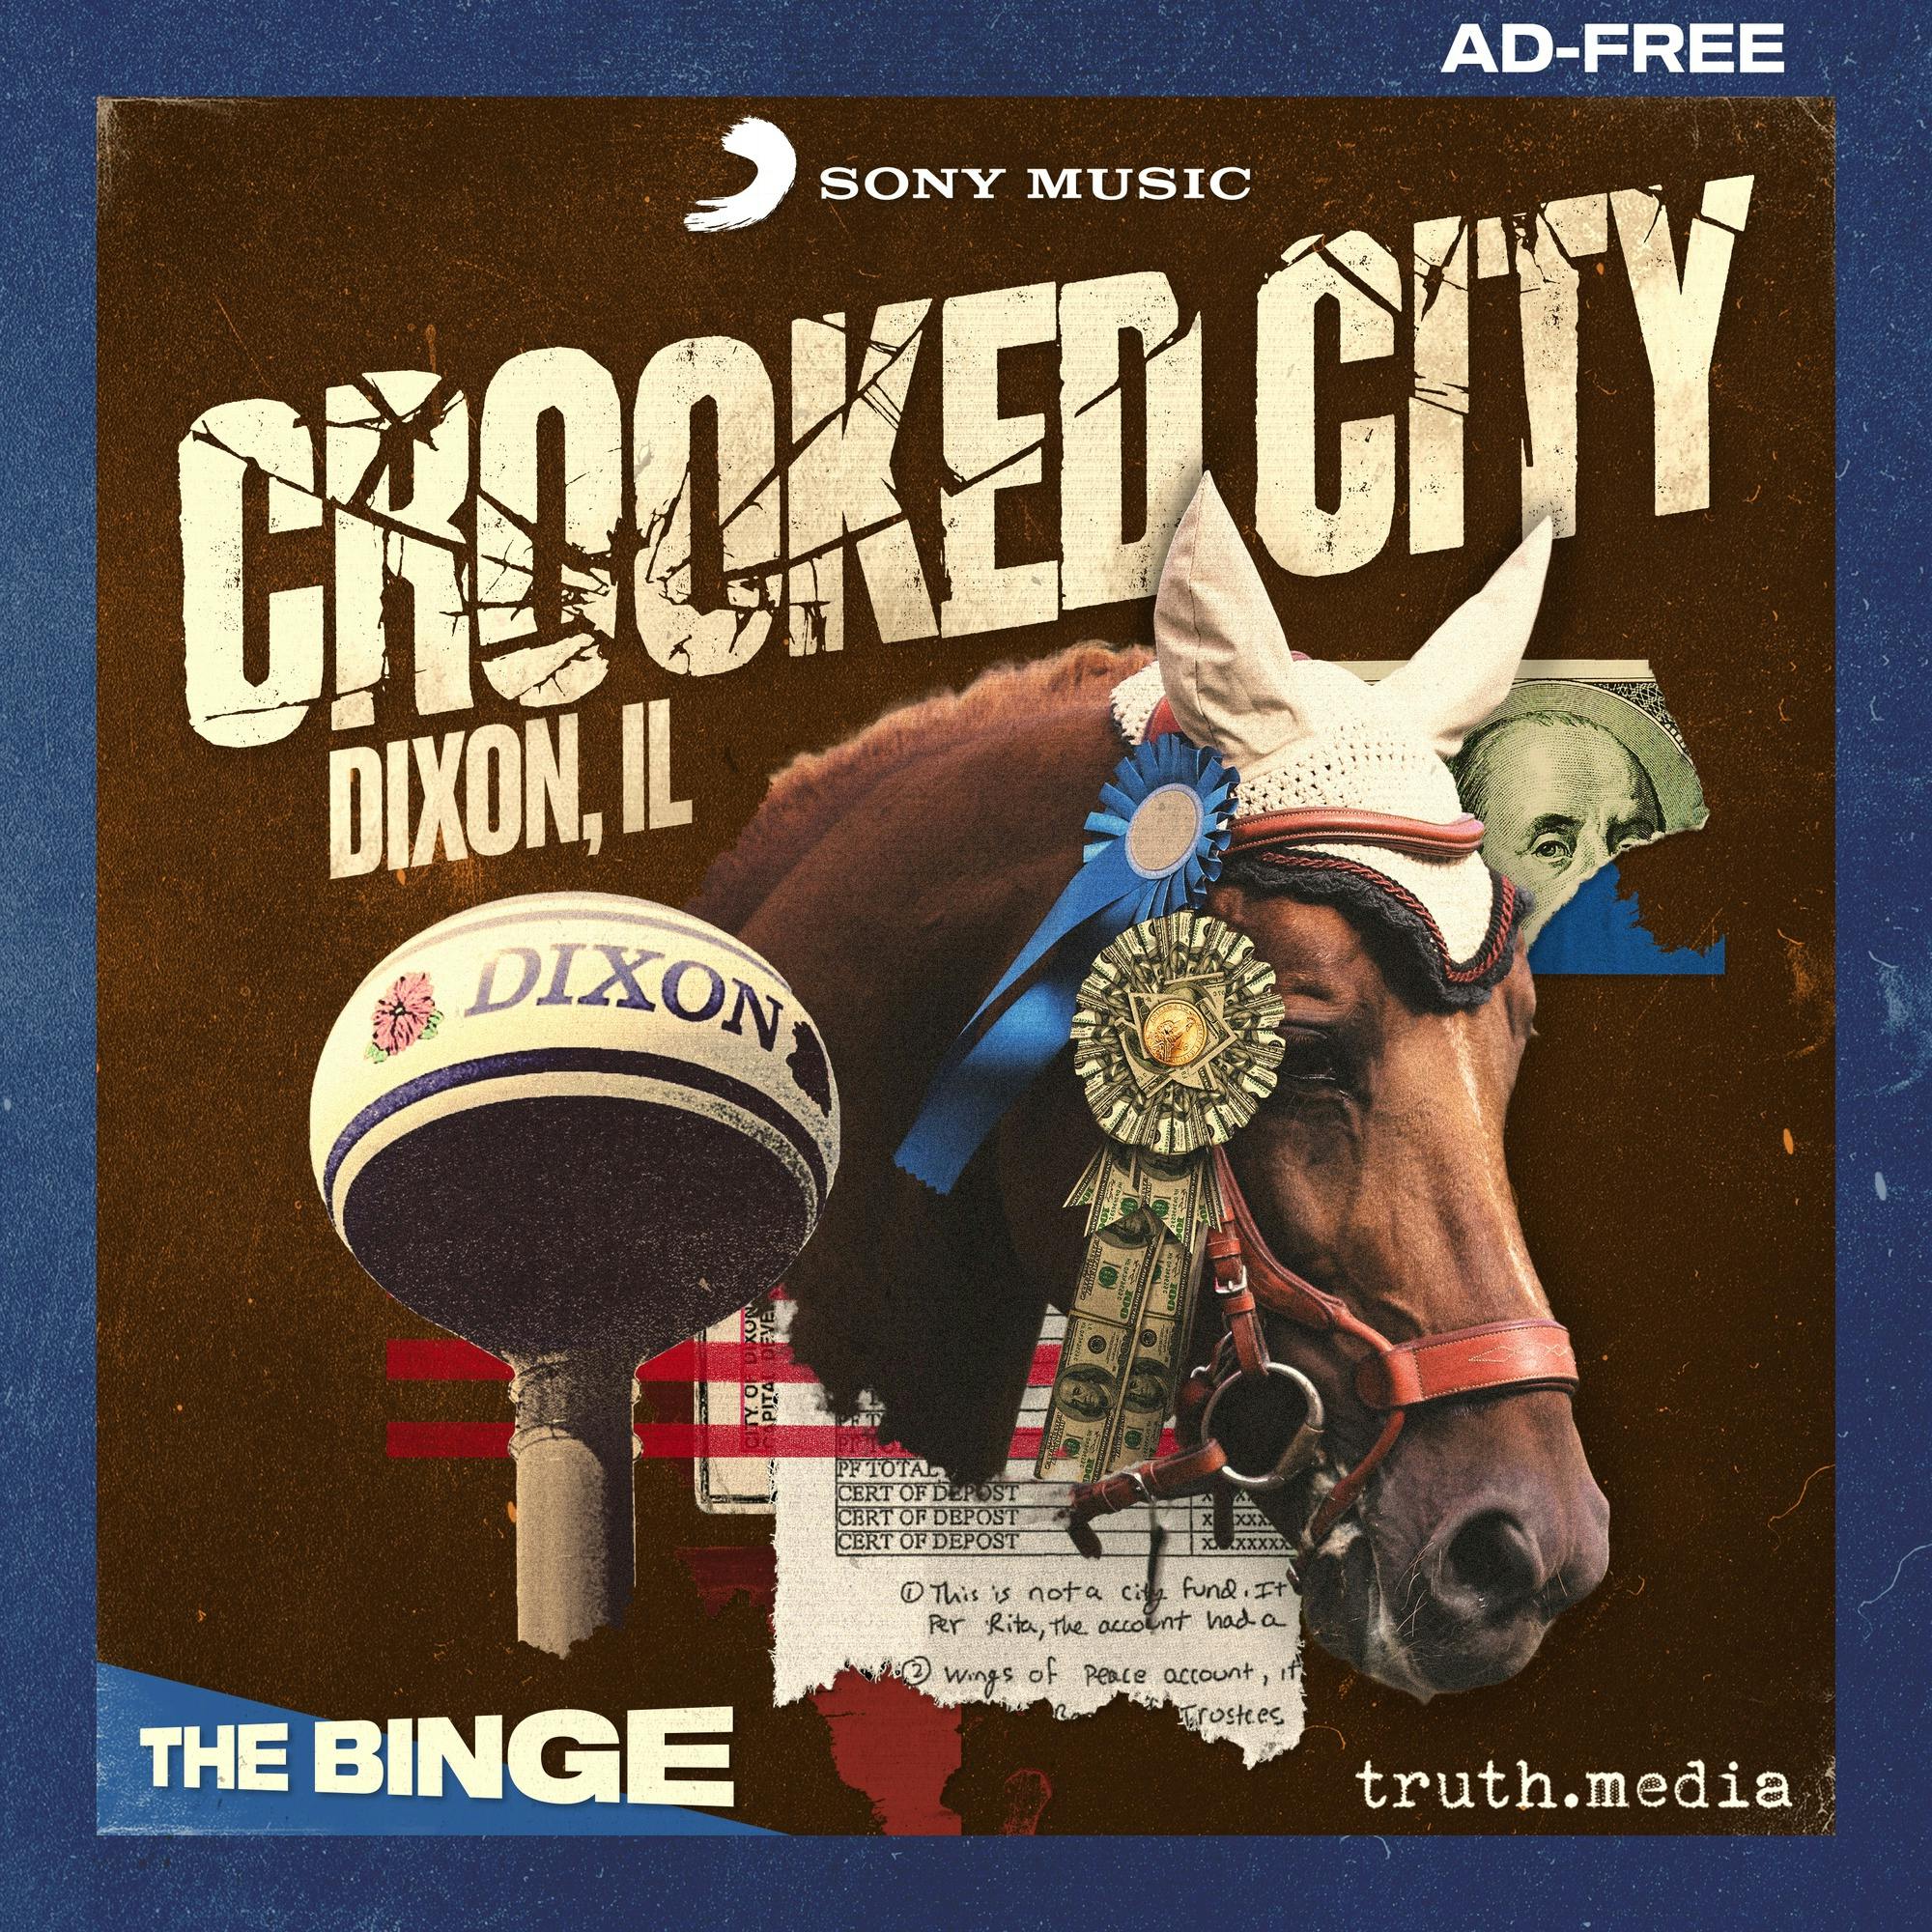 Crooked City: Dixon, IL (Ad-Free, THE BINGE) podcast tile